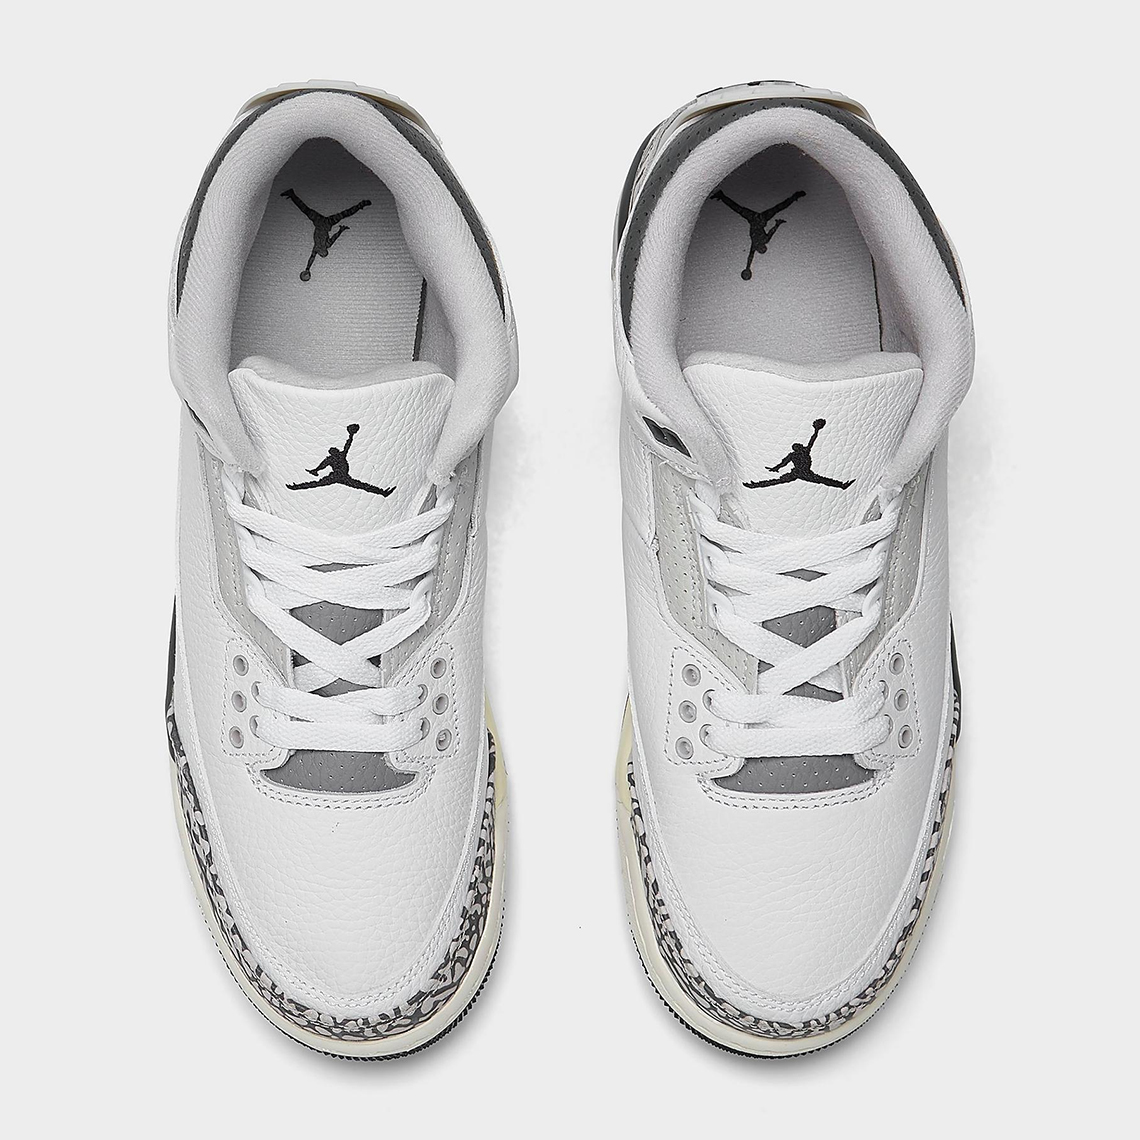 Jordan Air Jordan 3 Retro Hide N' Sneak Preschool Lifestyle Shoes